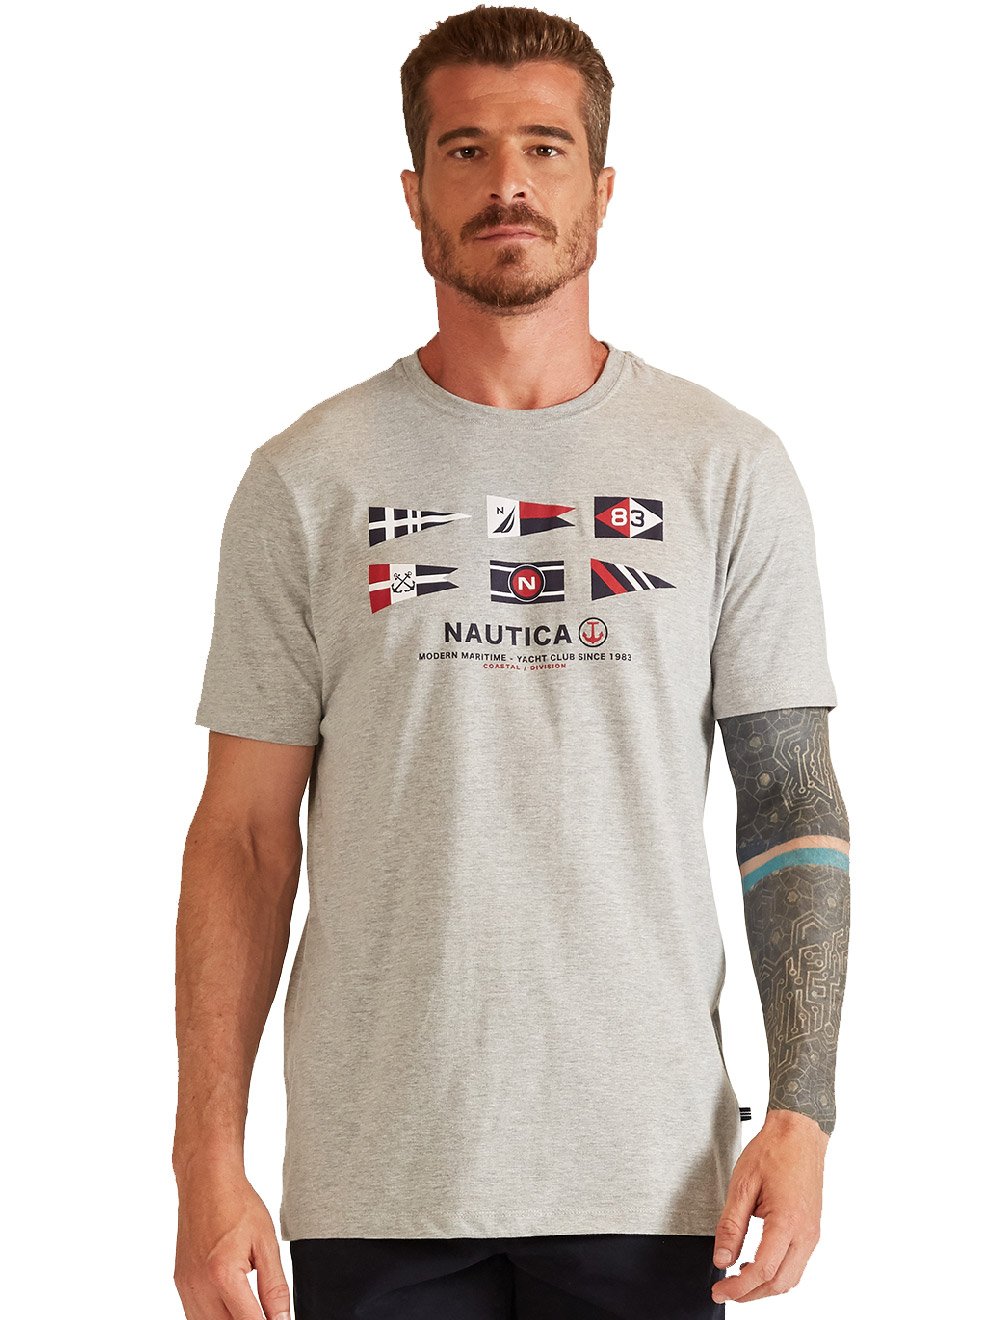 Camiseta Nautica Masculina Modern Maritime Cinza Mescla